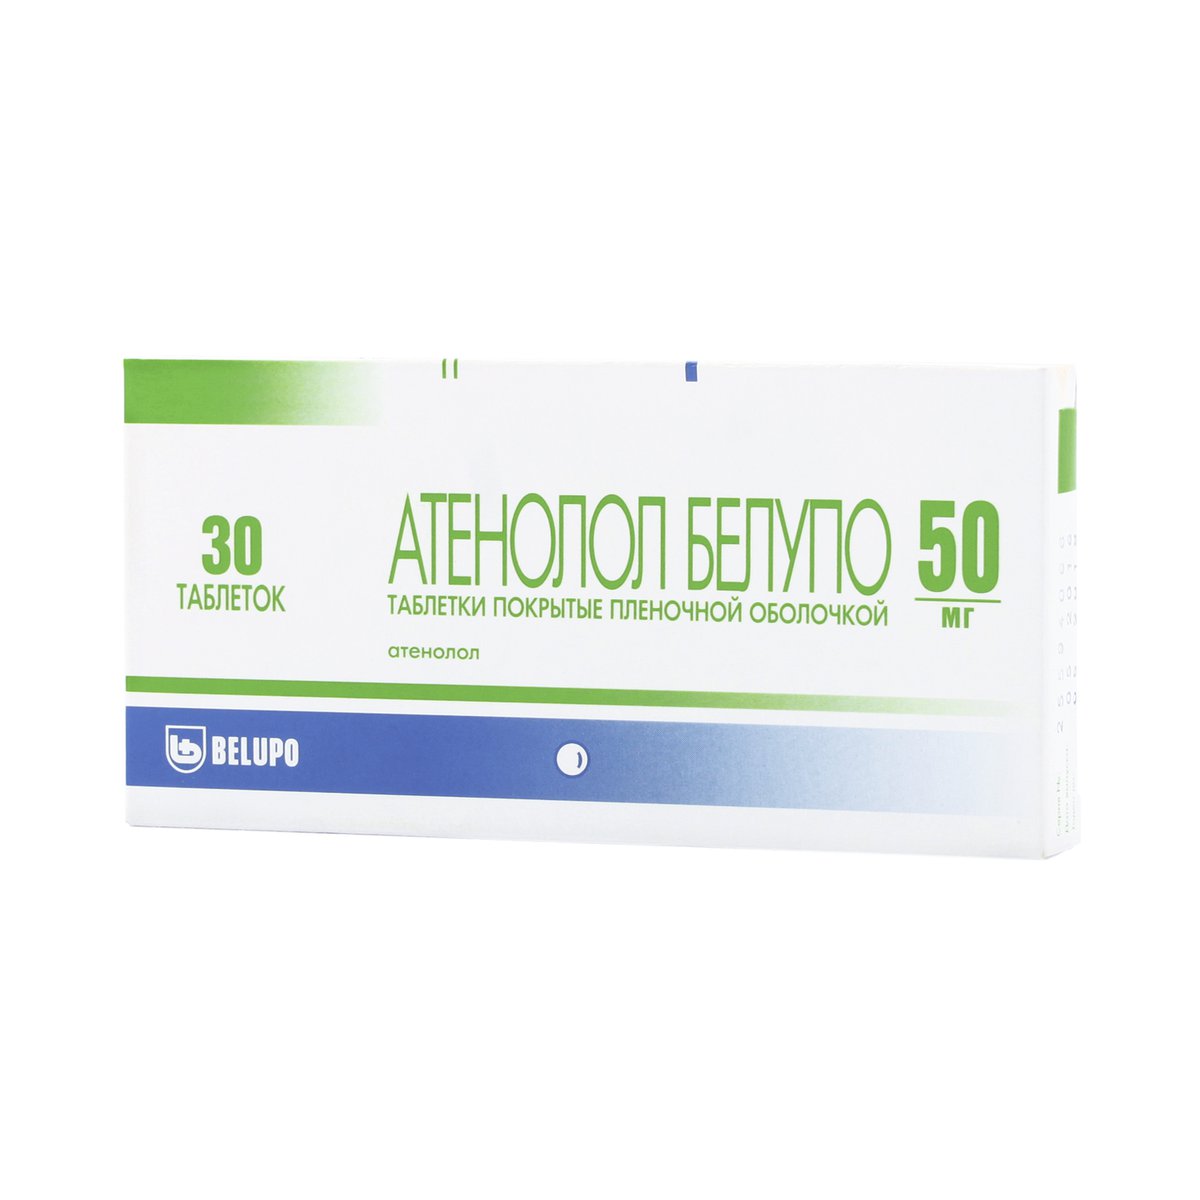 Атенолол белупо (таблетки, 30 шт, 50 мг) - цена,  онлайн  .